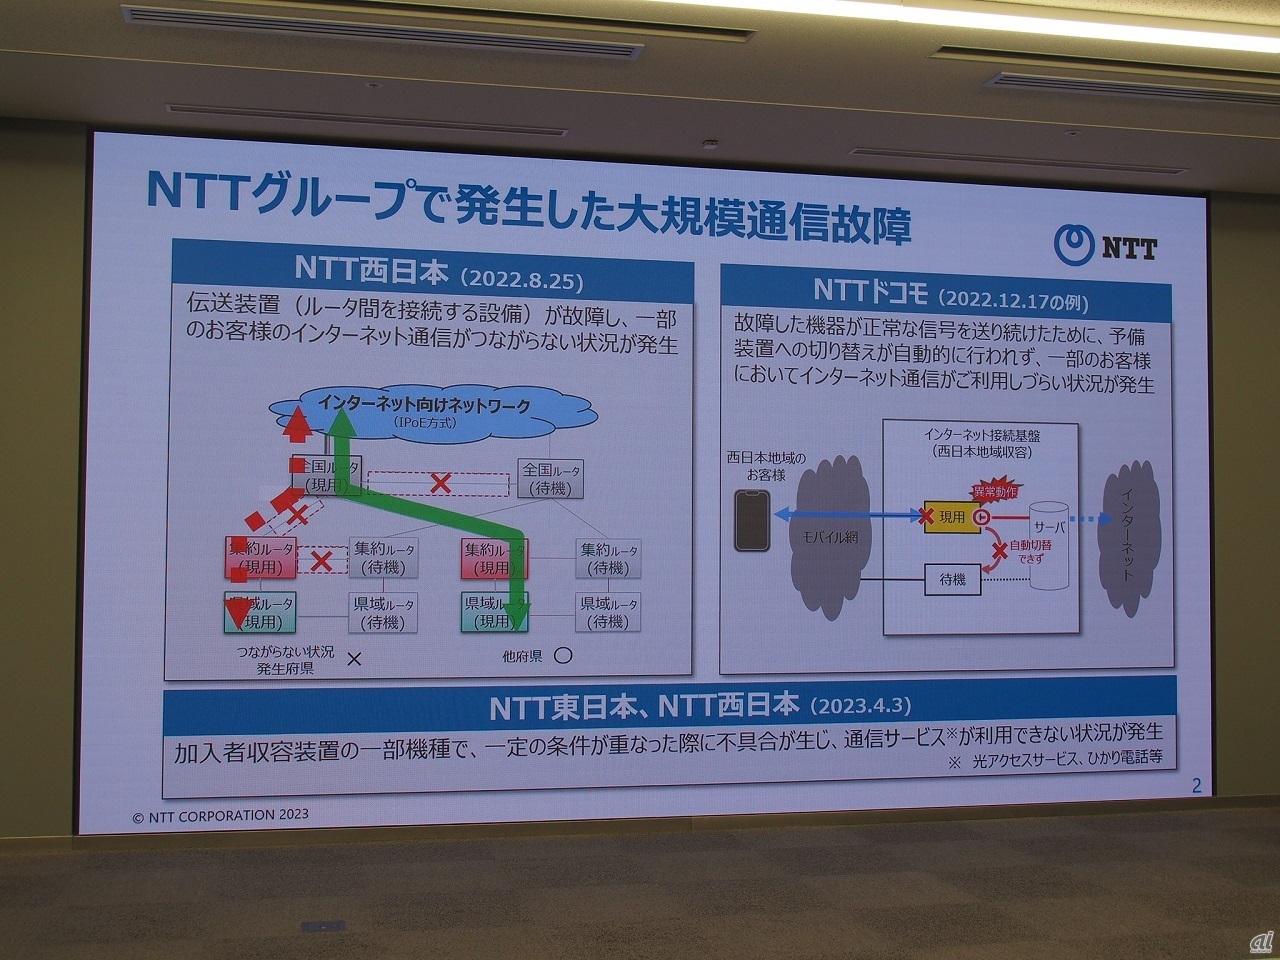 NTTグループで見れば今回だけでなく、2022年にはNTT西日本とNTTドコモが大規模通信障害を起こしており、一層の通信障害対策が求められている状況だという